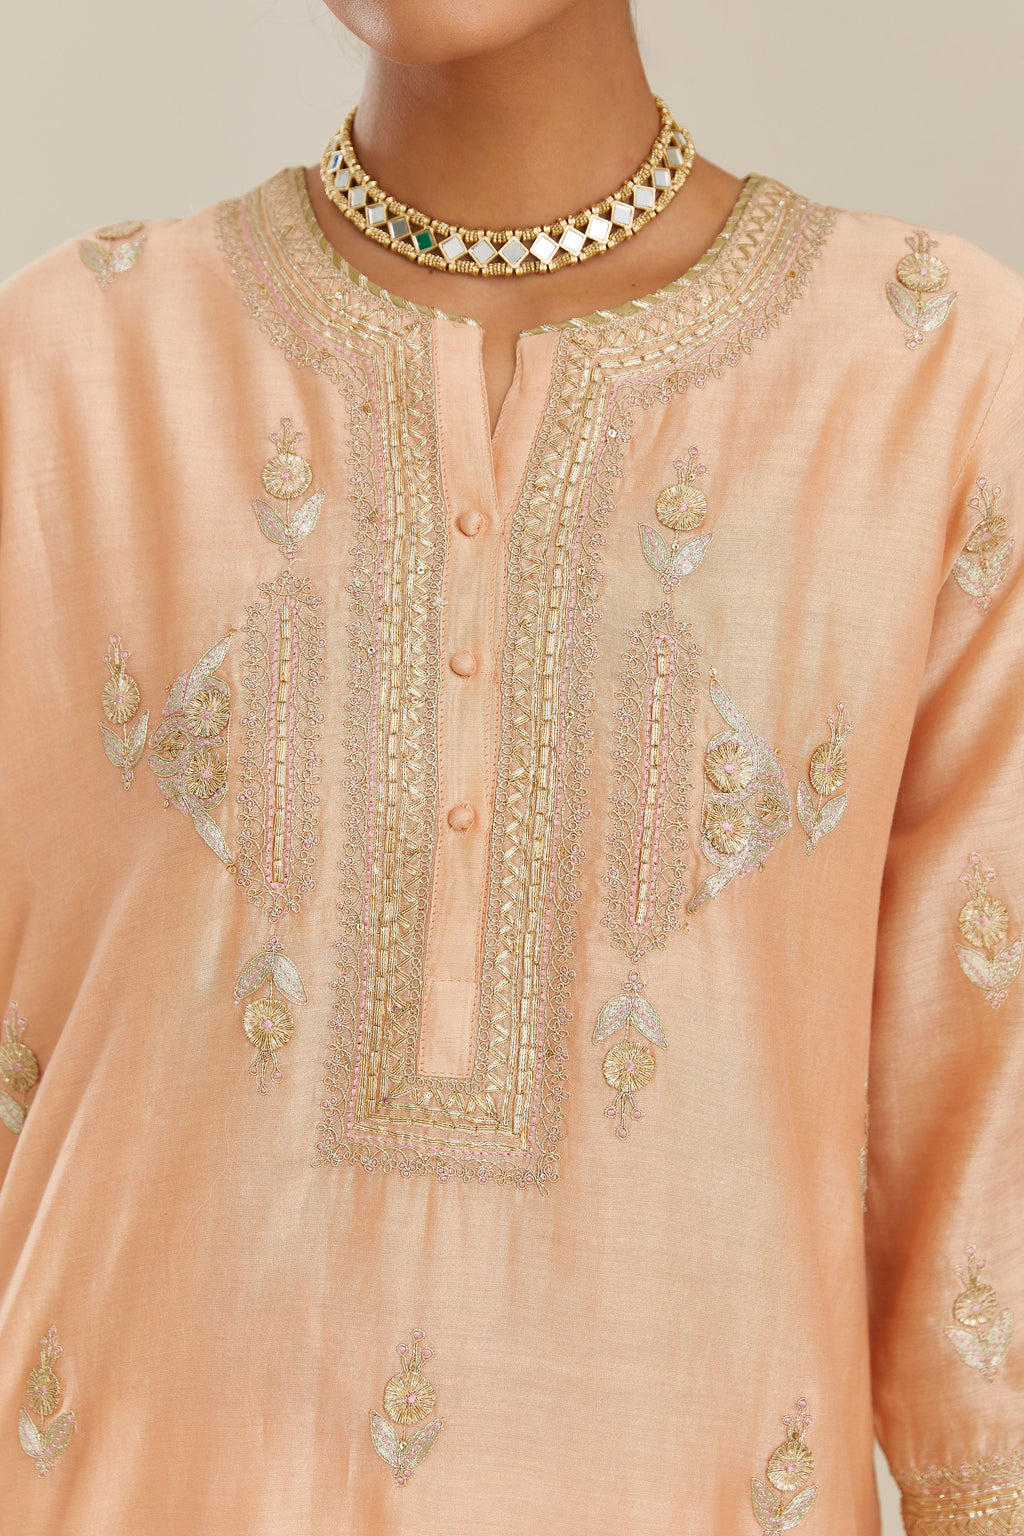 Peach silk chanderi straight kurta set with gold gota and zari embroidery.